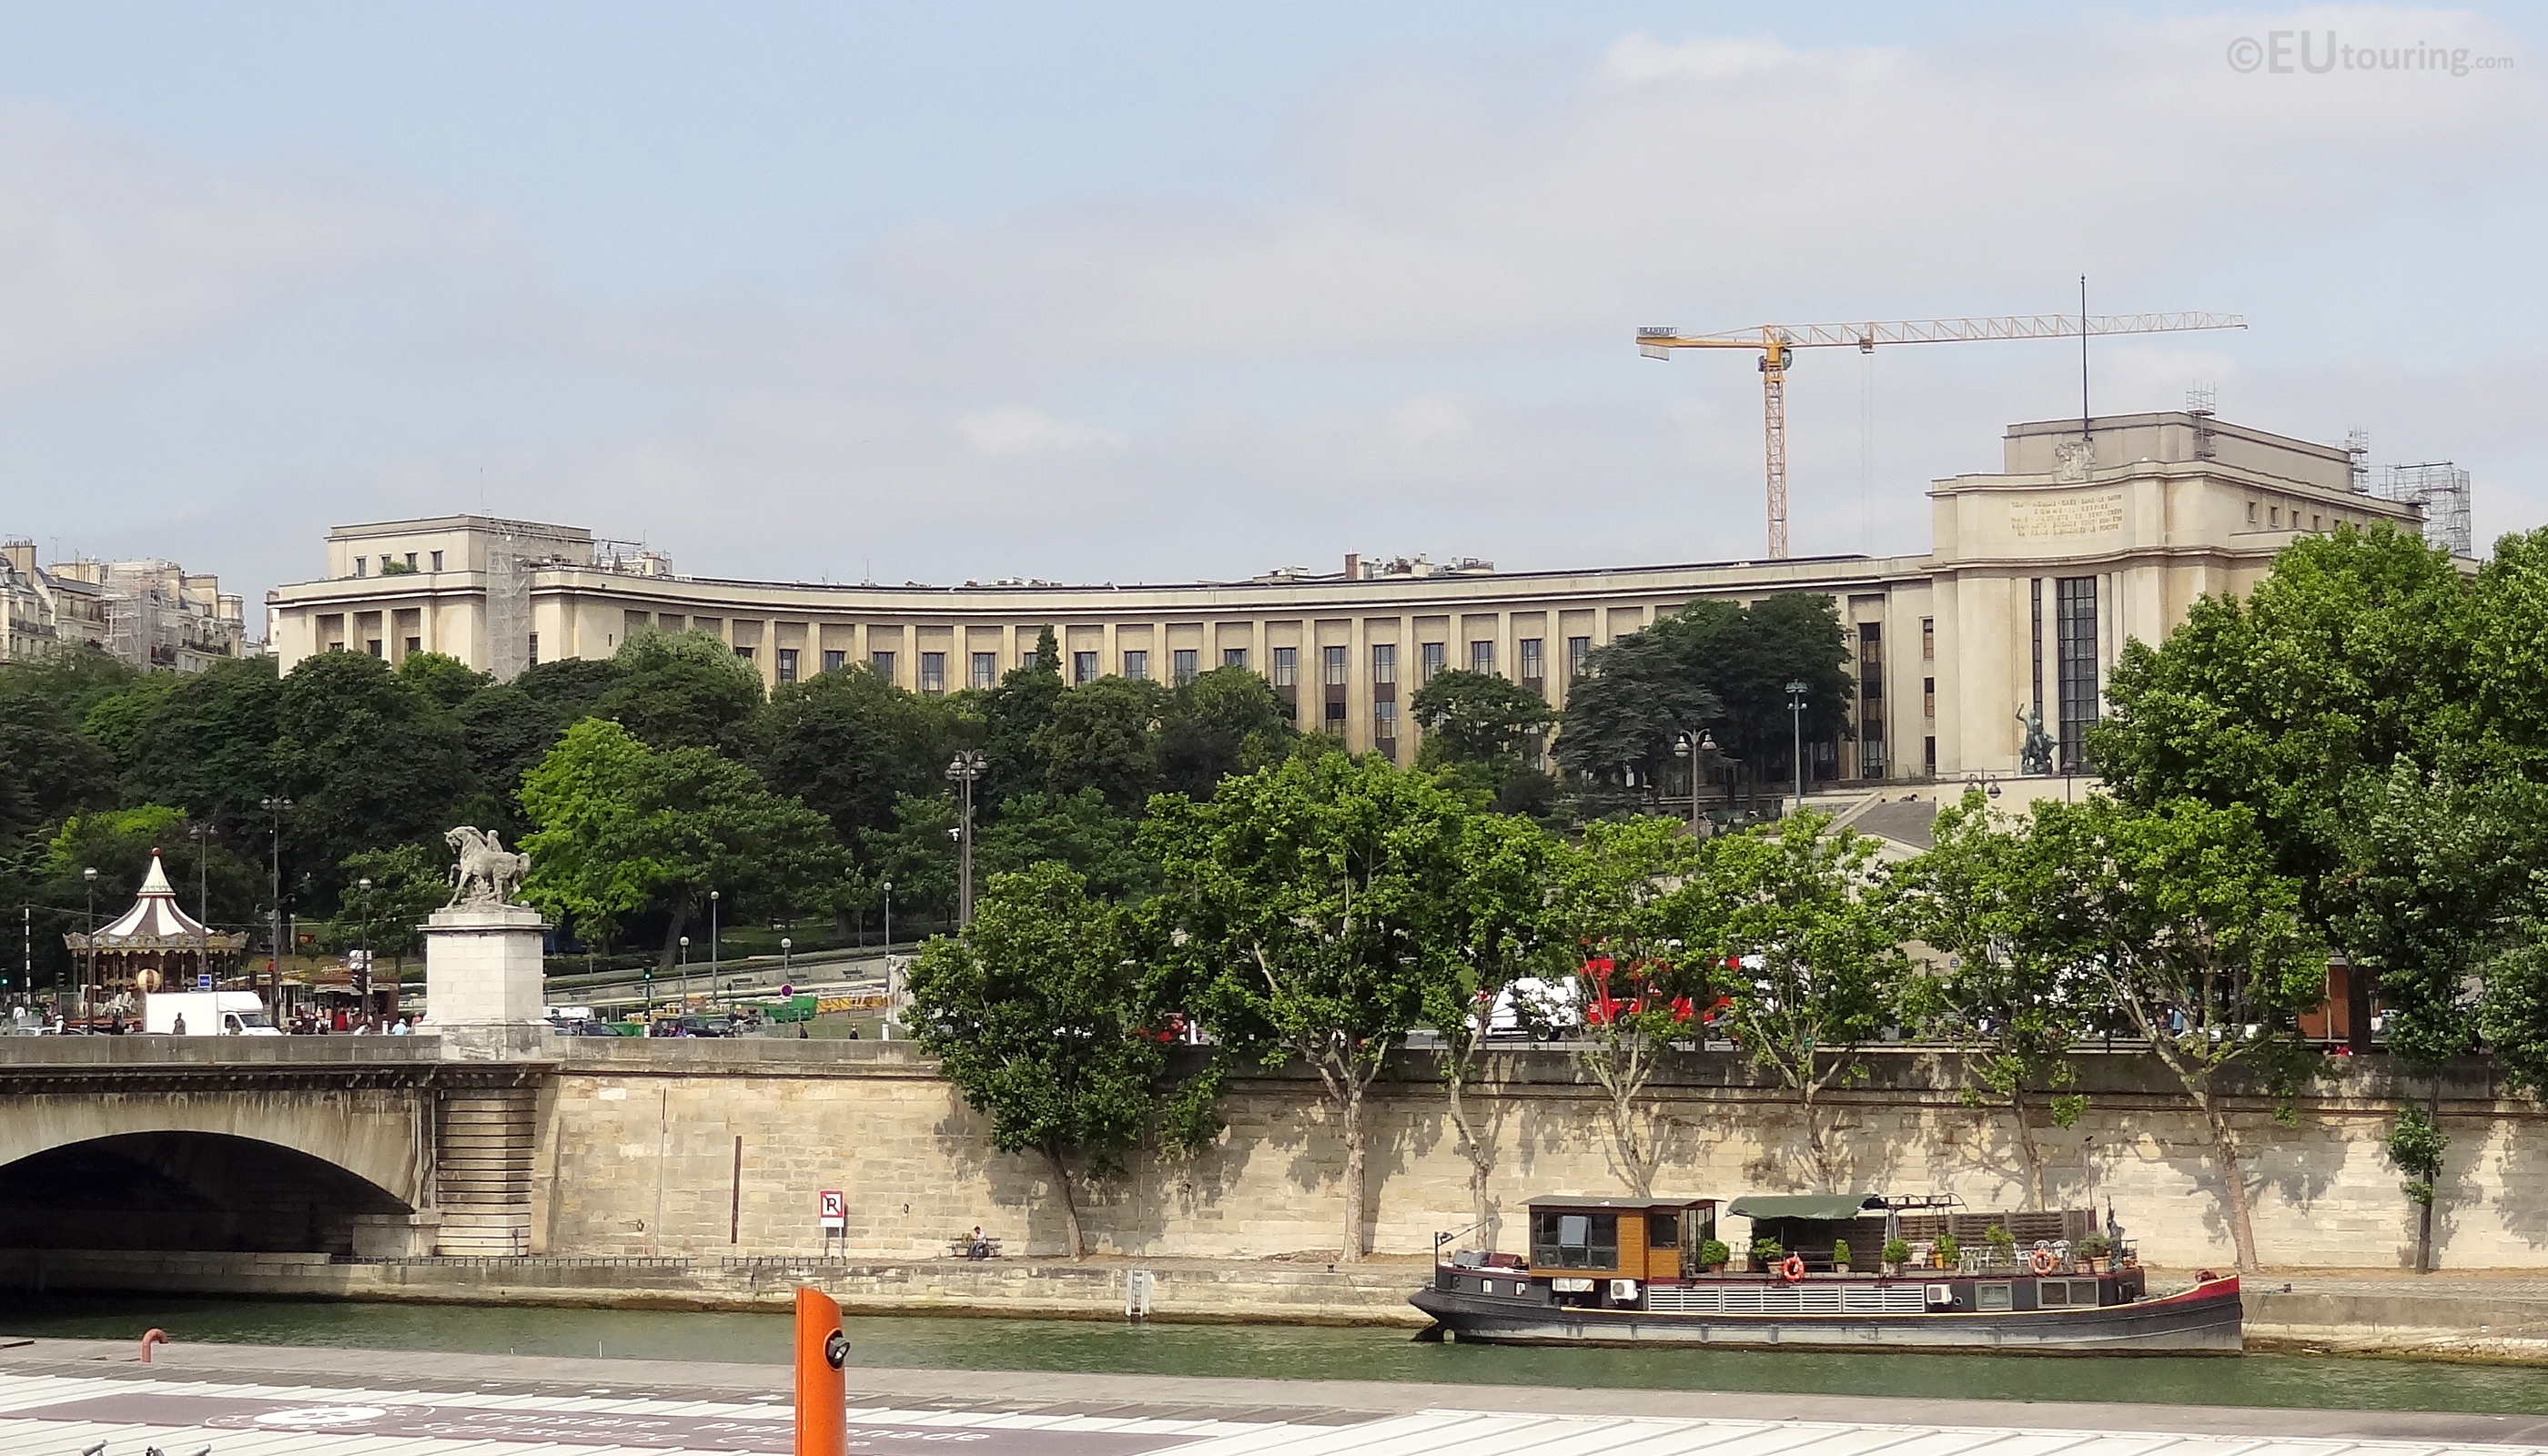 Left wing of Palais de Chaillot